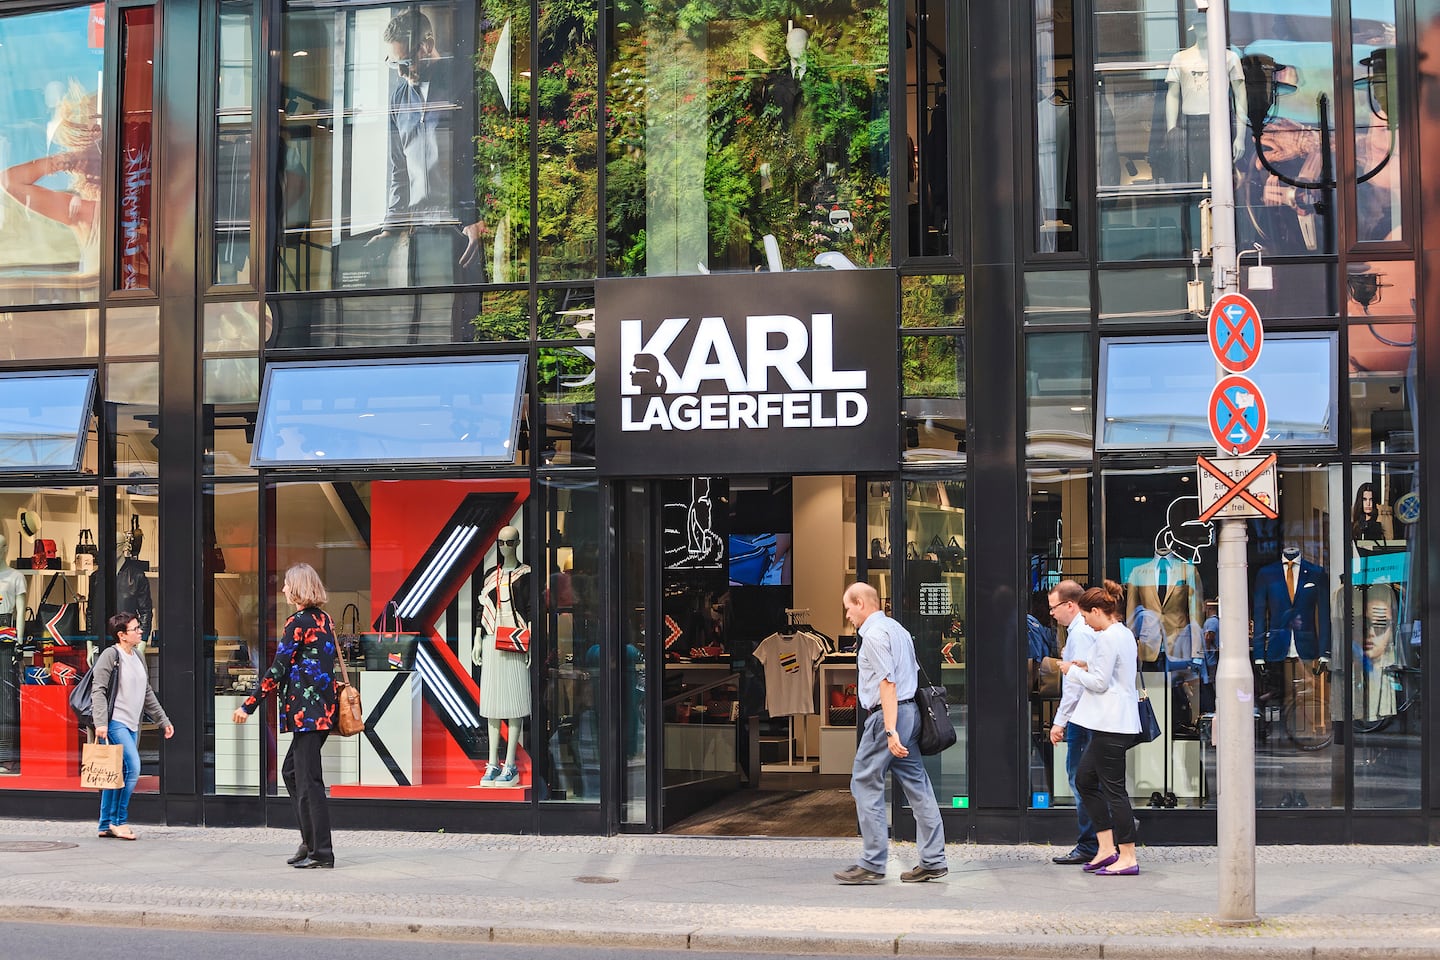 G-III apparel to buy Karl Lagerfeld brand.